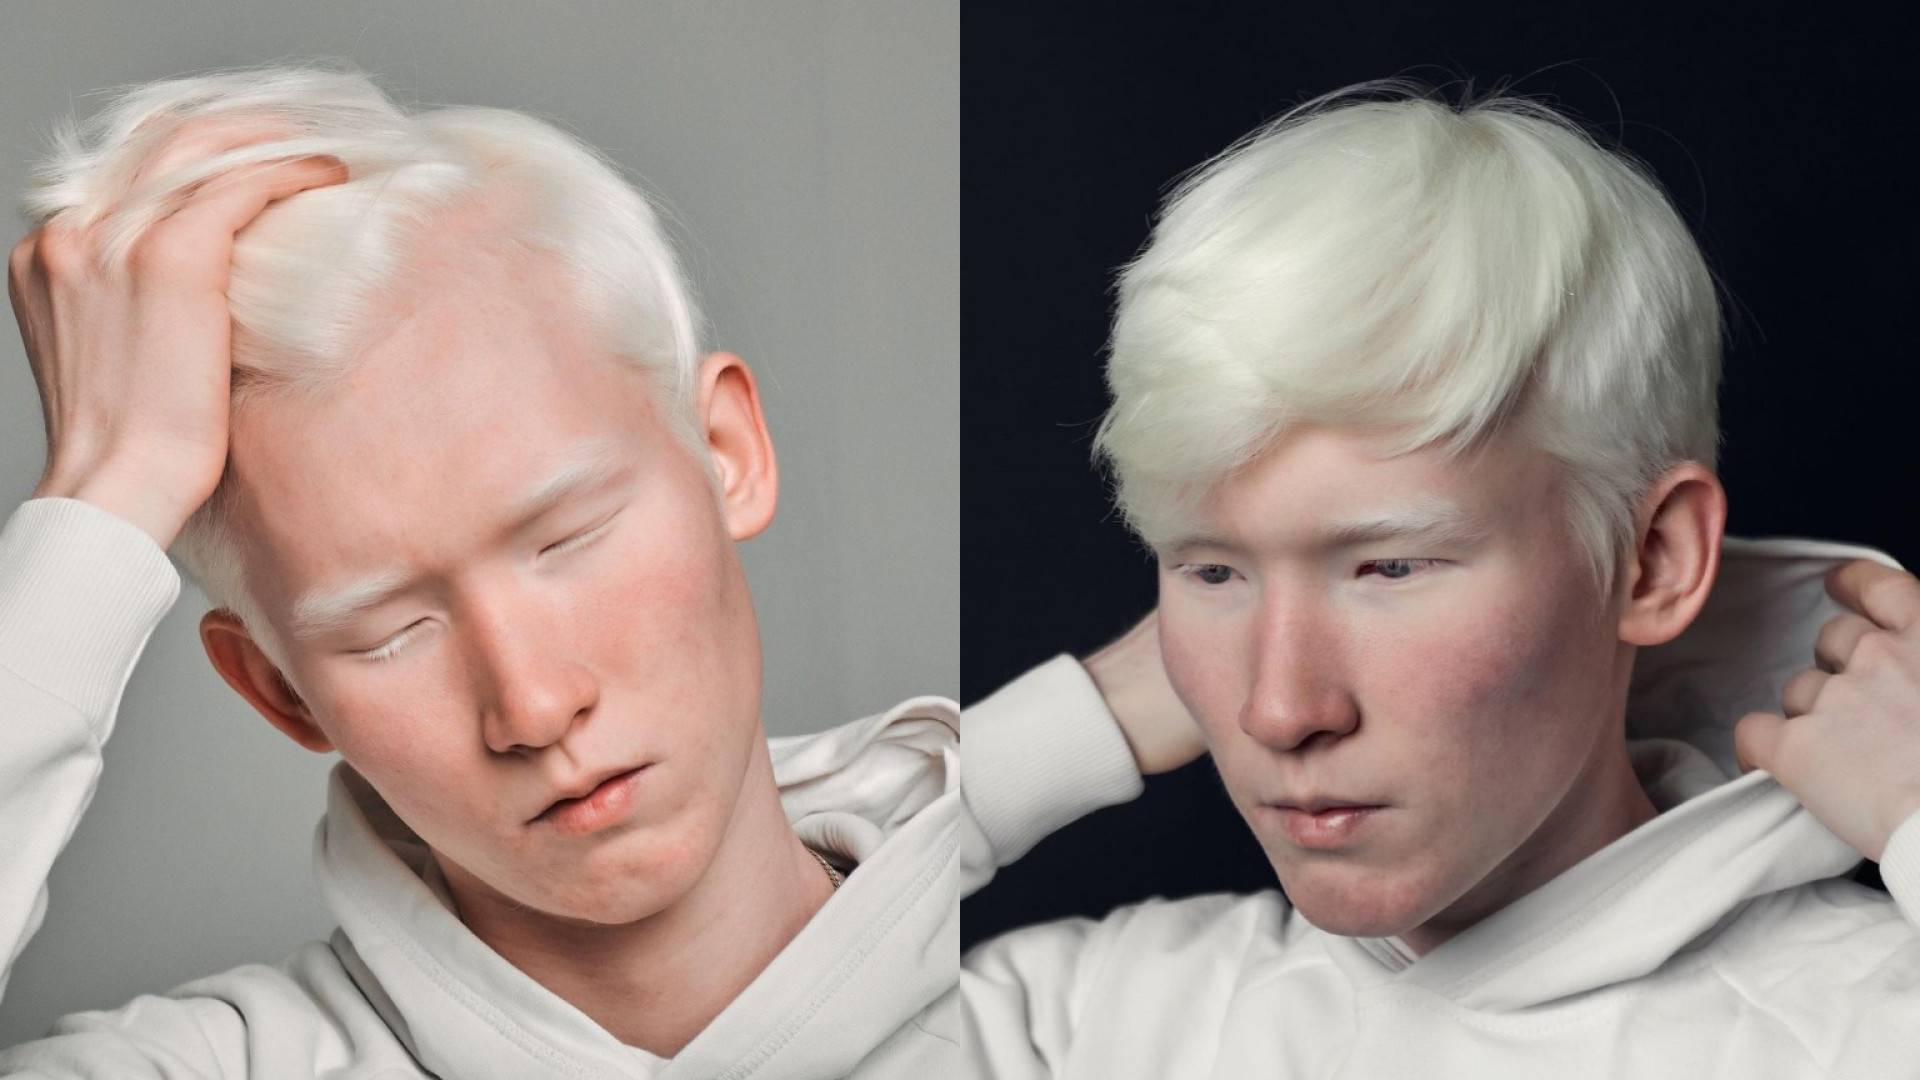 негр и азиат альбинос фото 44